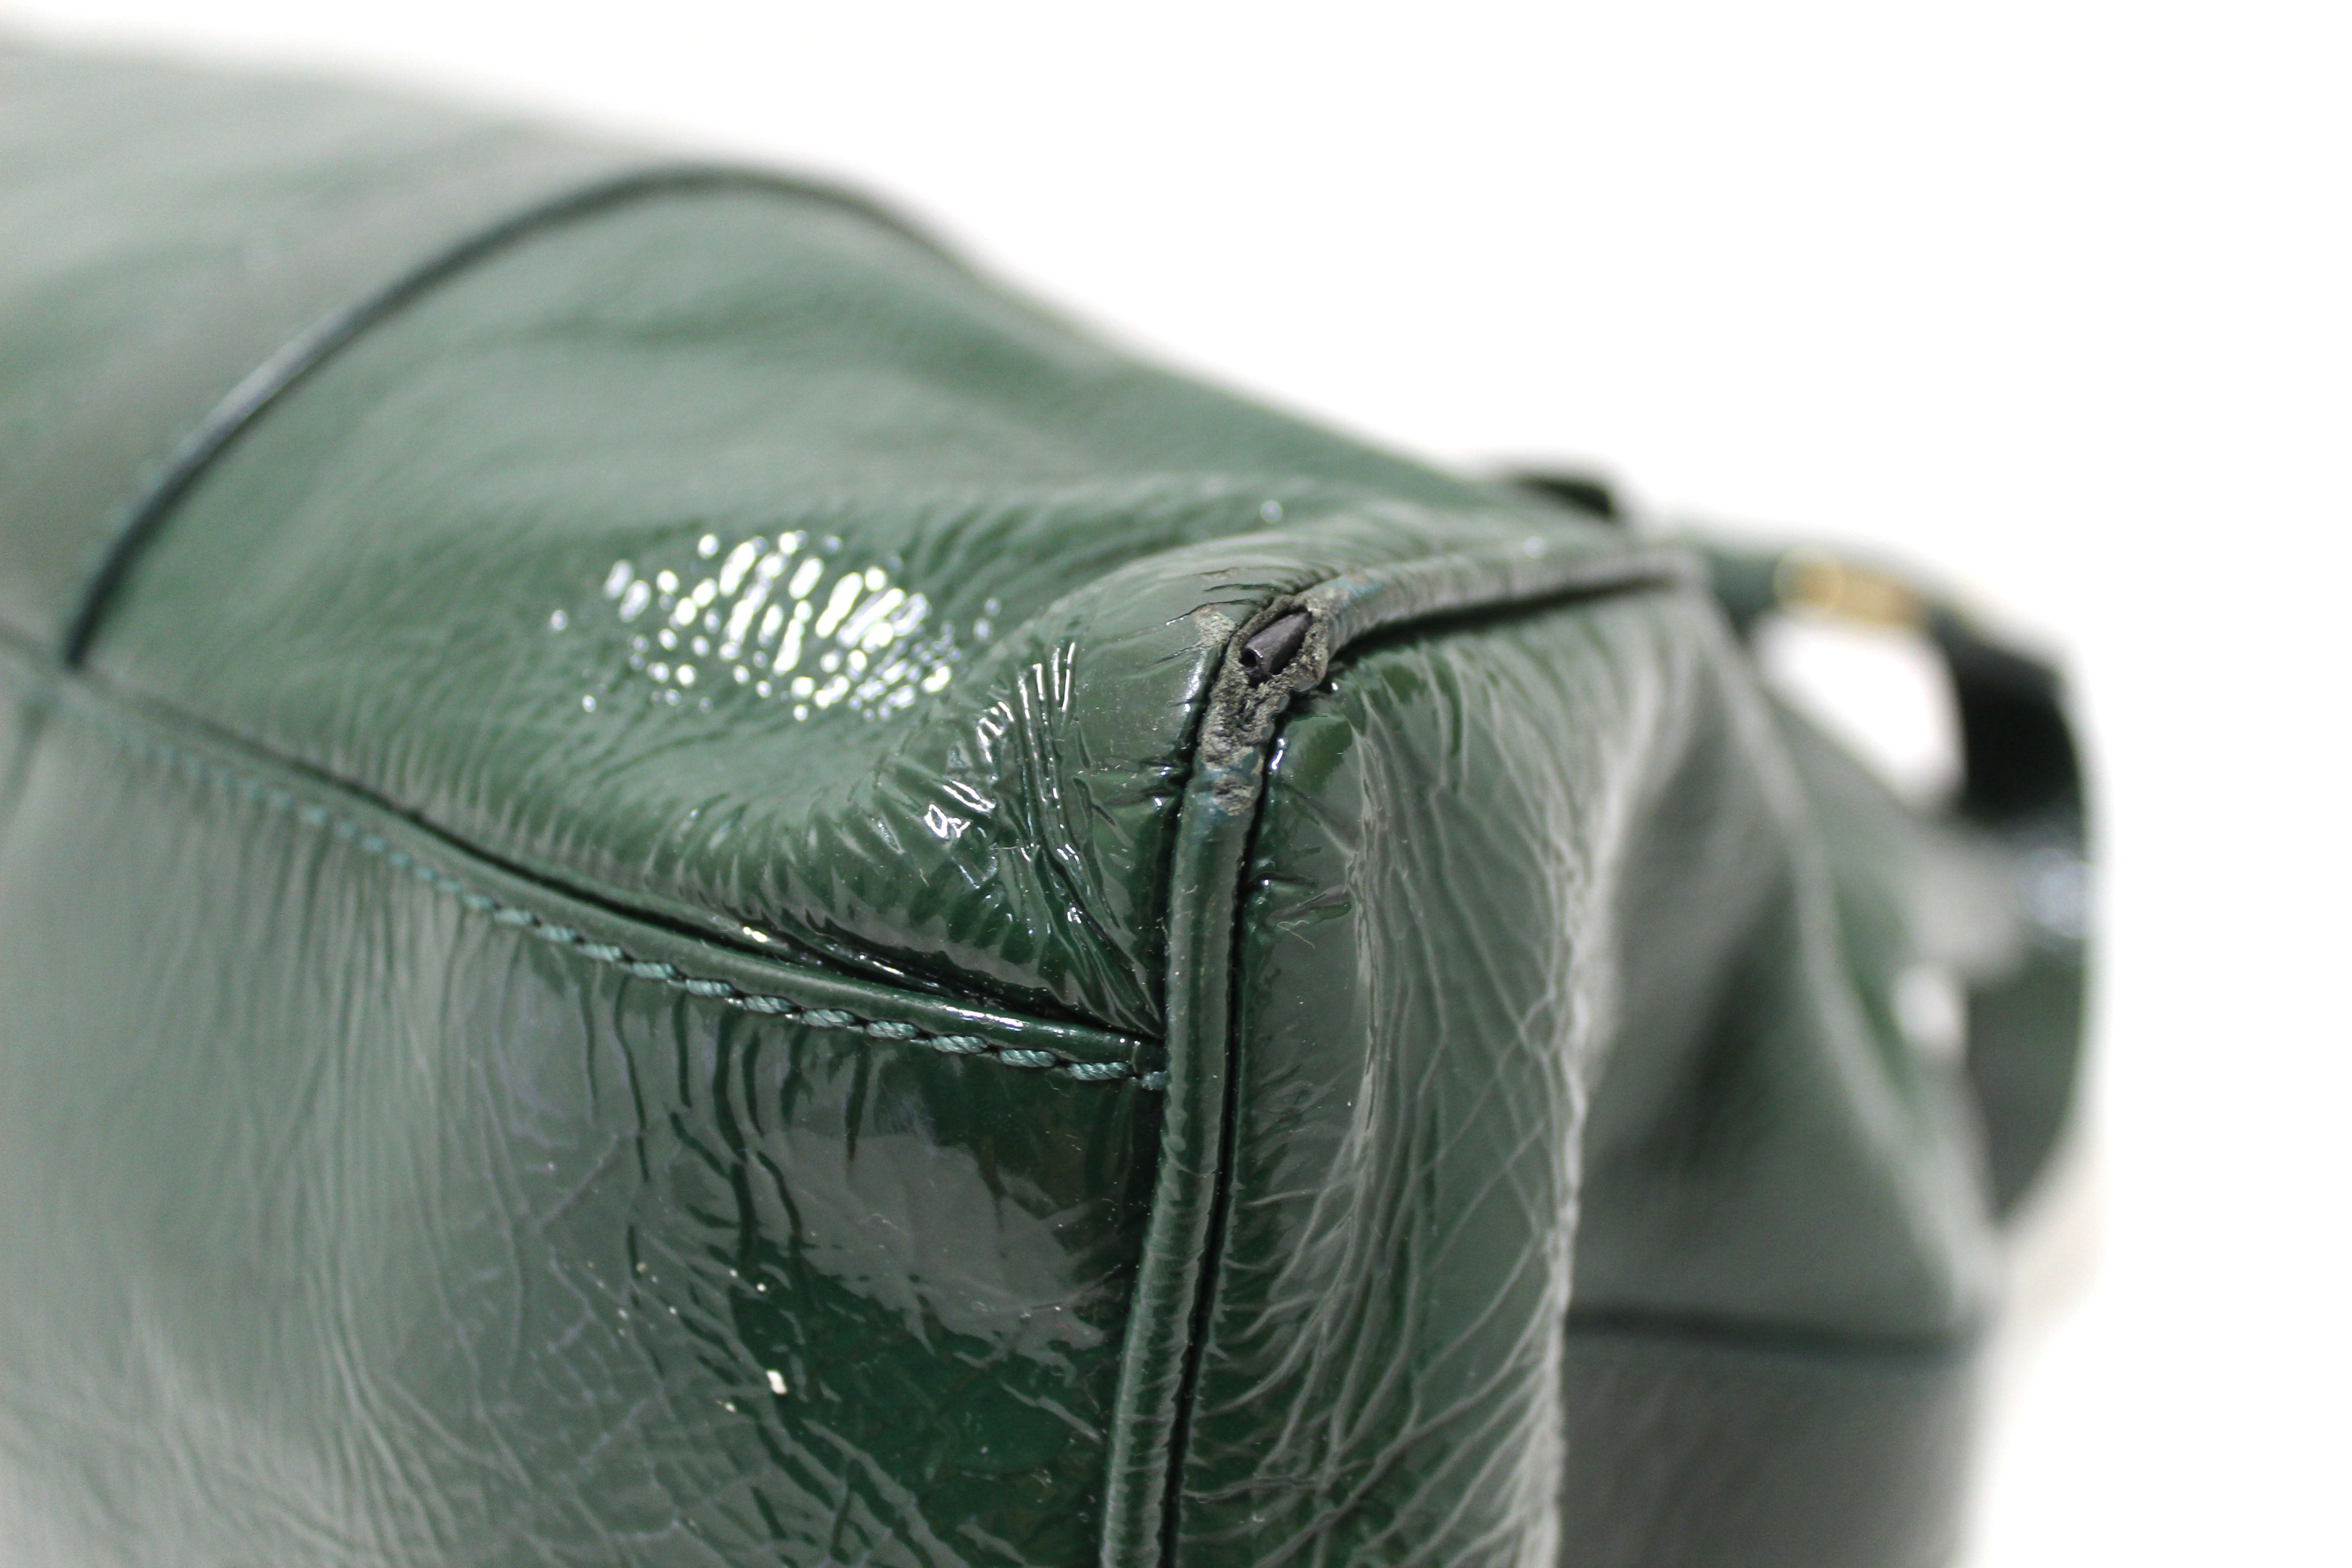 Authentic Fendi Green Patent Leather Shoulder Bag